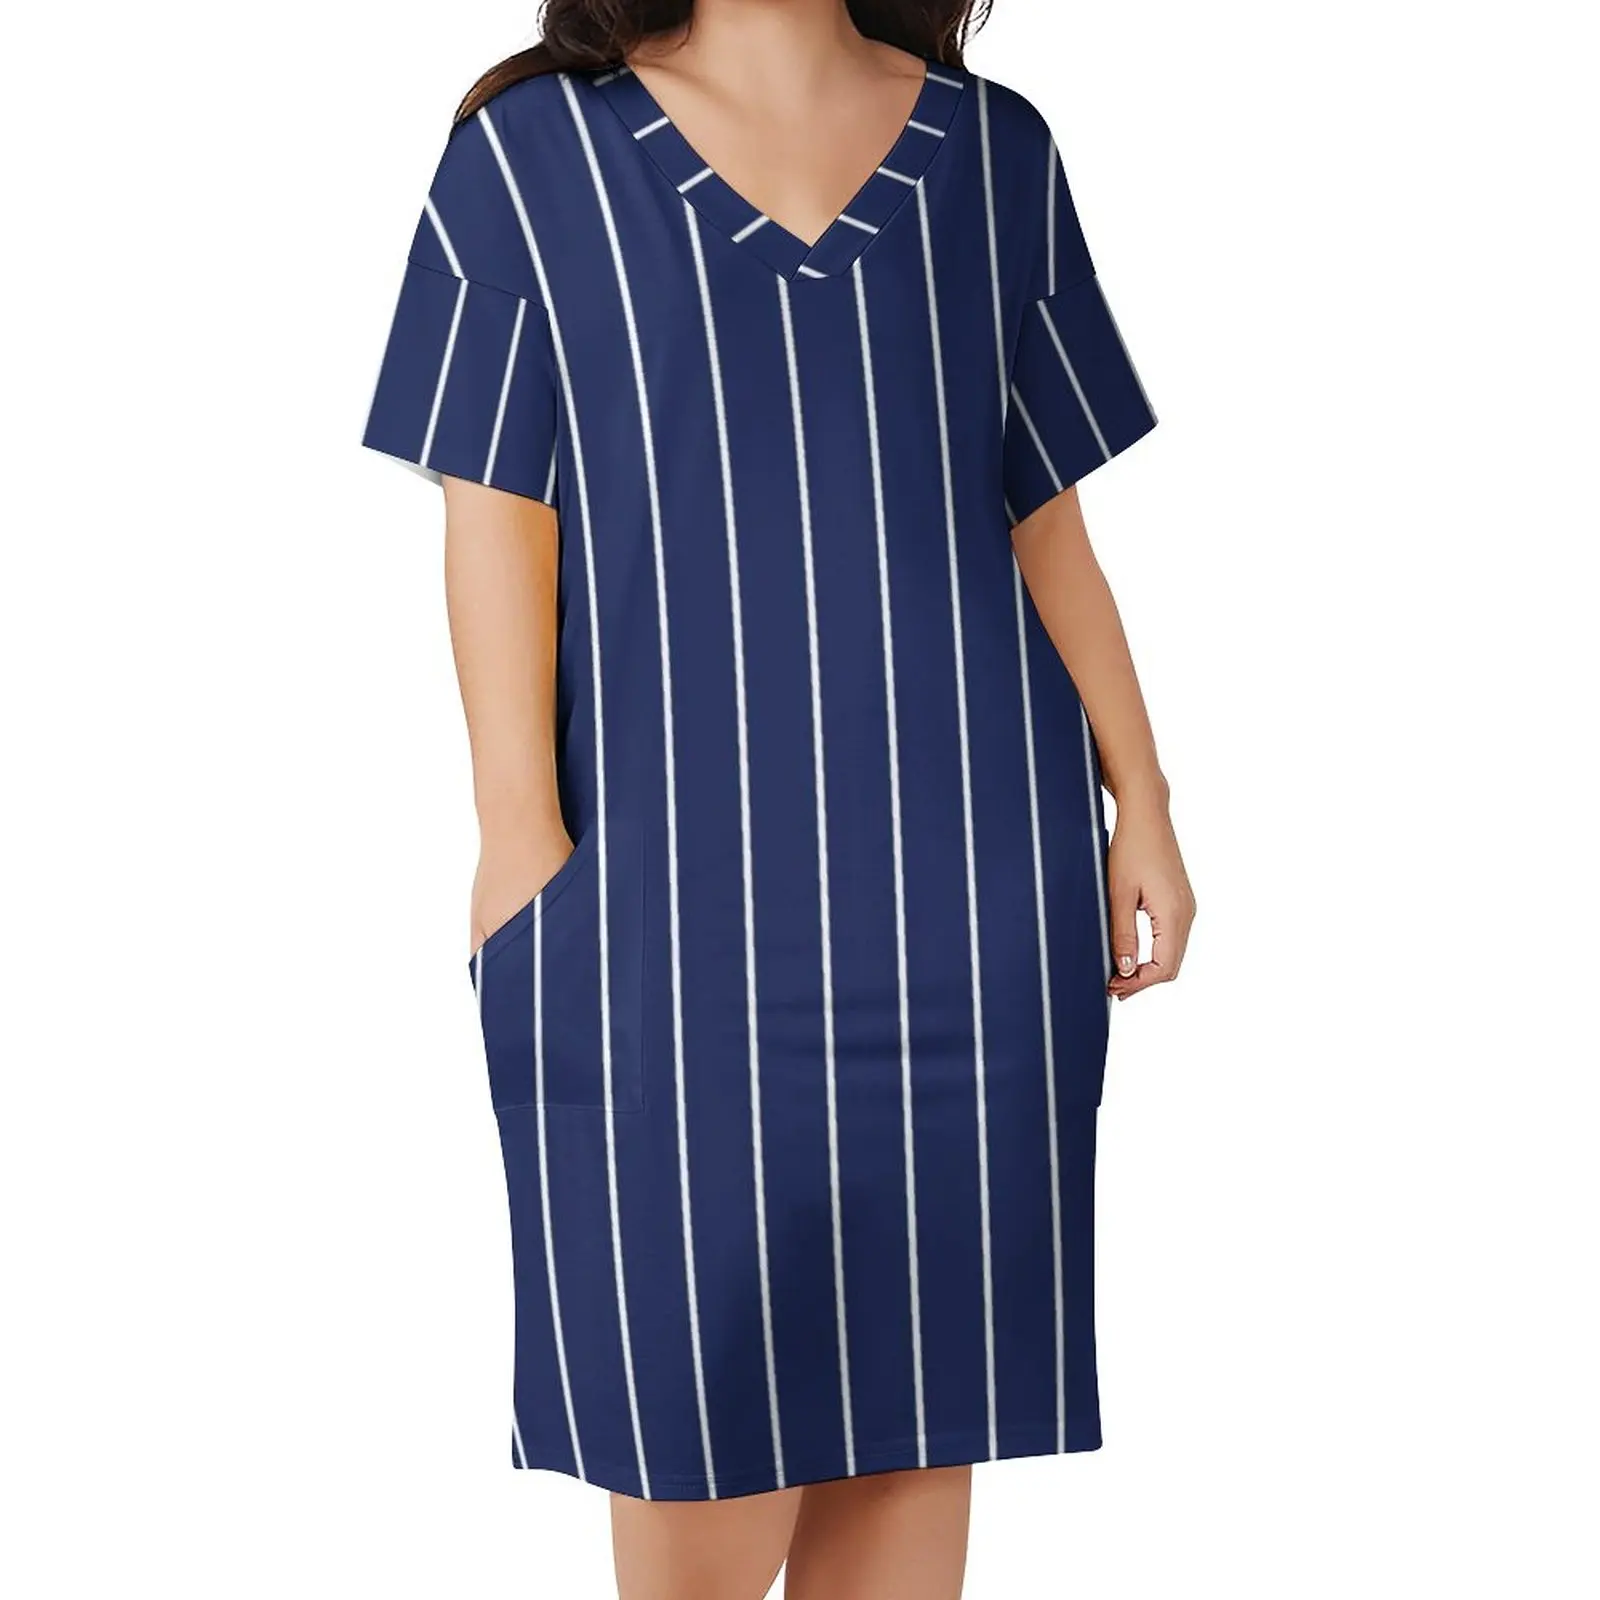 Classic Striped Dress V Neck Blue And White Lines Street Wear Dresses Summer Elegant Casual Dress Women Print Plus Size Vestido